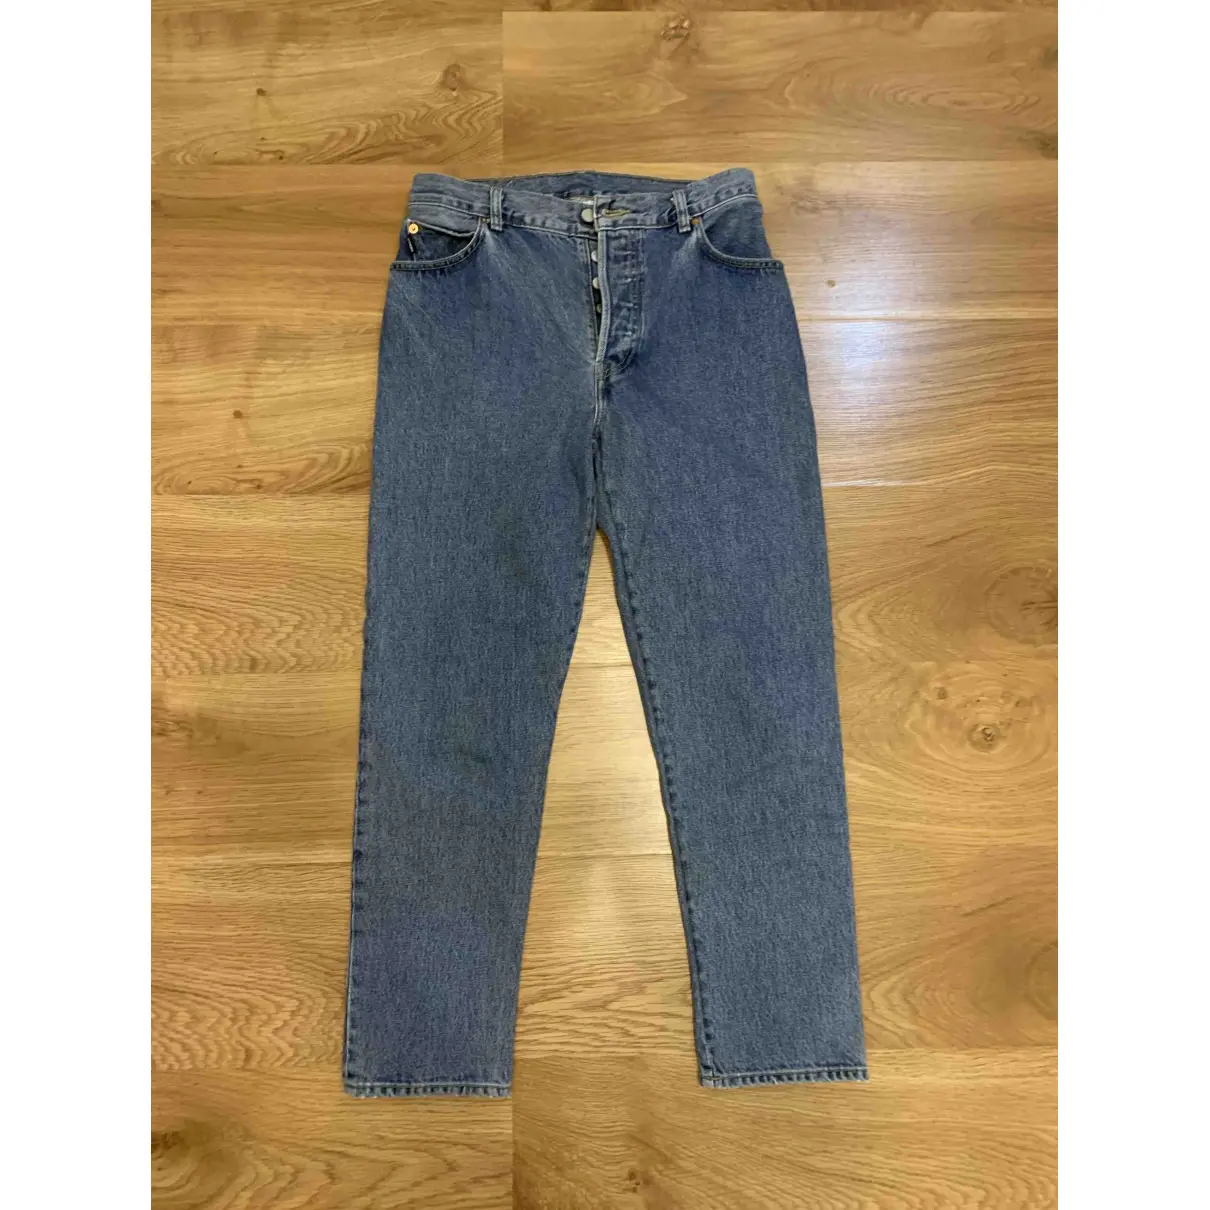 Buy VETEMENTS X Levi's Straight jeans online